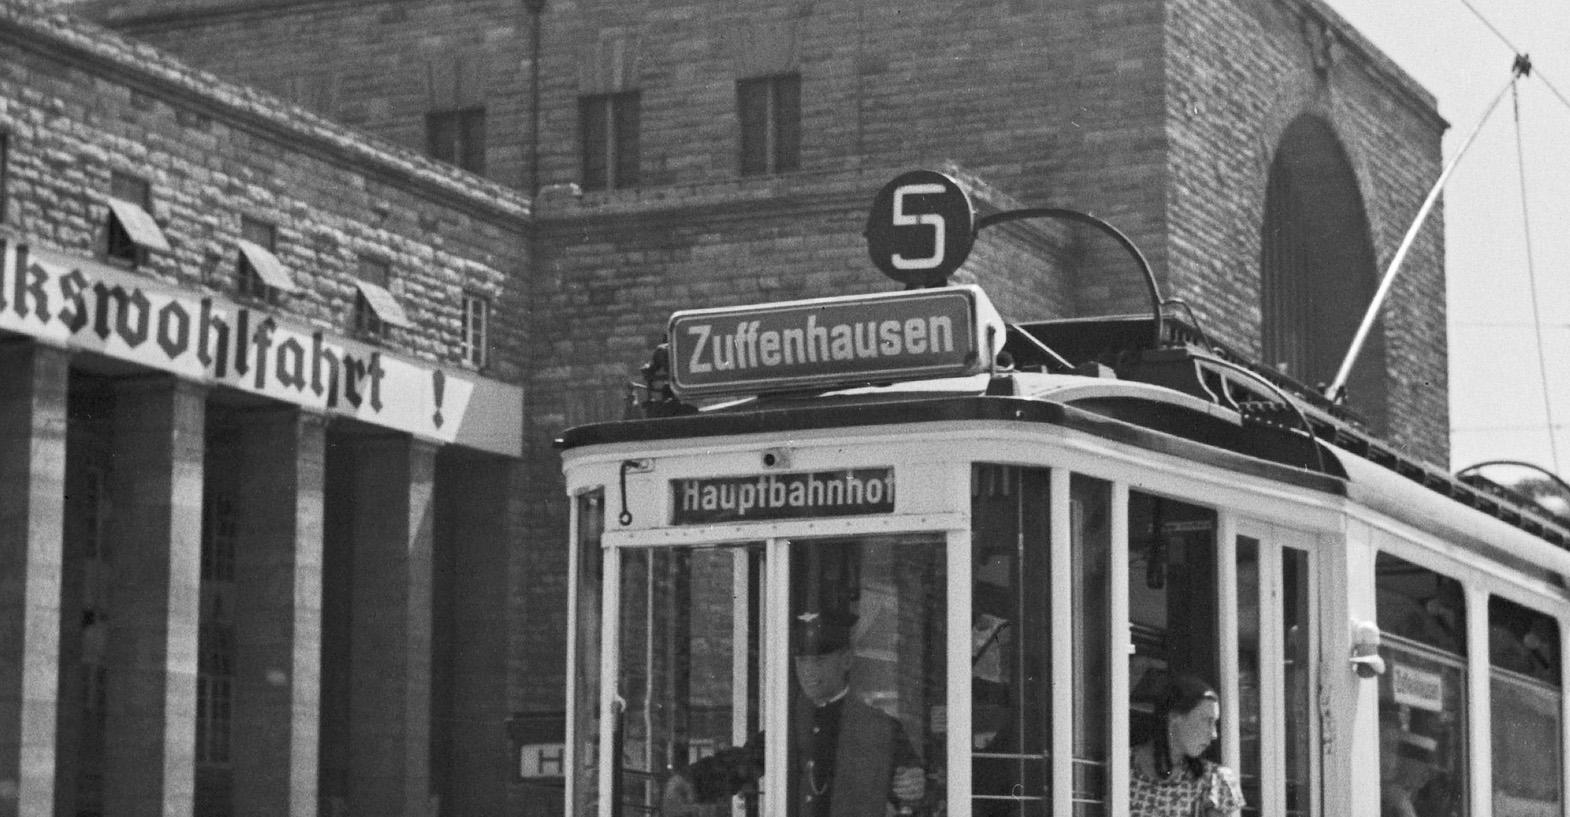 Tram line No. 5 Zuffenhausen main Station, Stuttgart Germany 1935, Printed Later - Photograph by Karl Heinrich Lämmel